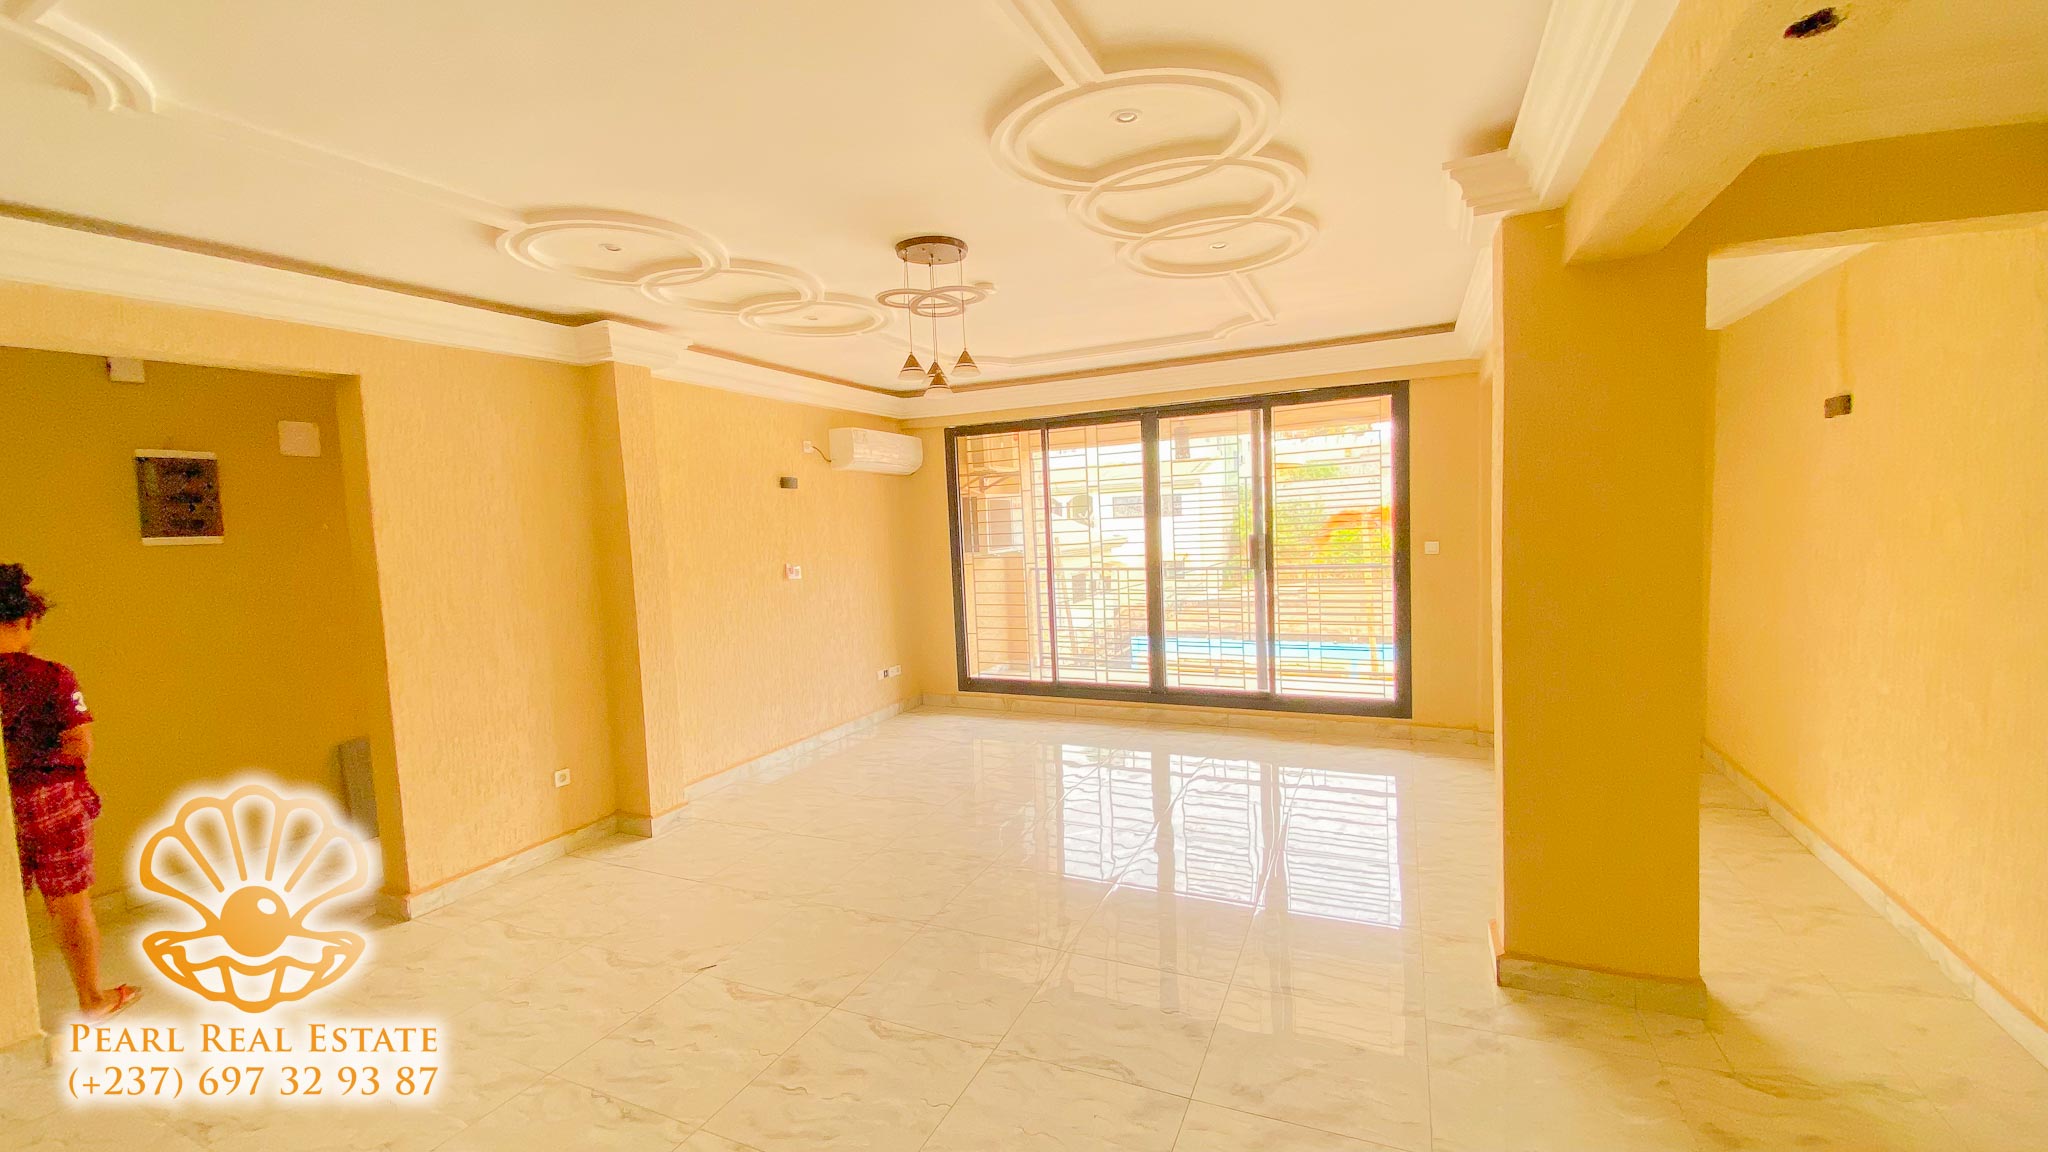 Apartment to rent - Yaoundé, Mfandena, Stade - 1 living room(s), 3 bedroom(s), 2 bathroom(s) - 550 000 FCFA / month